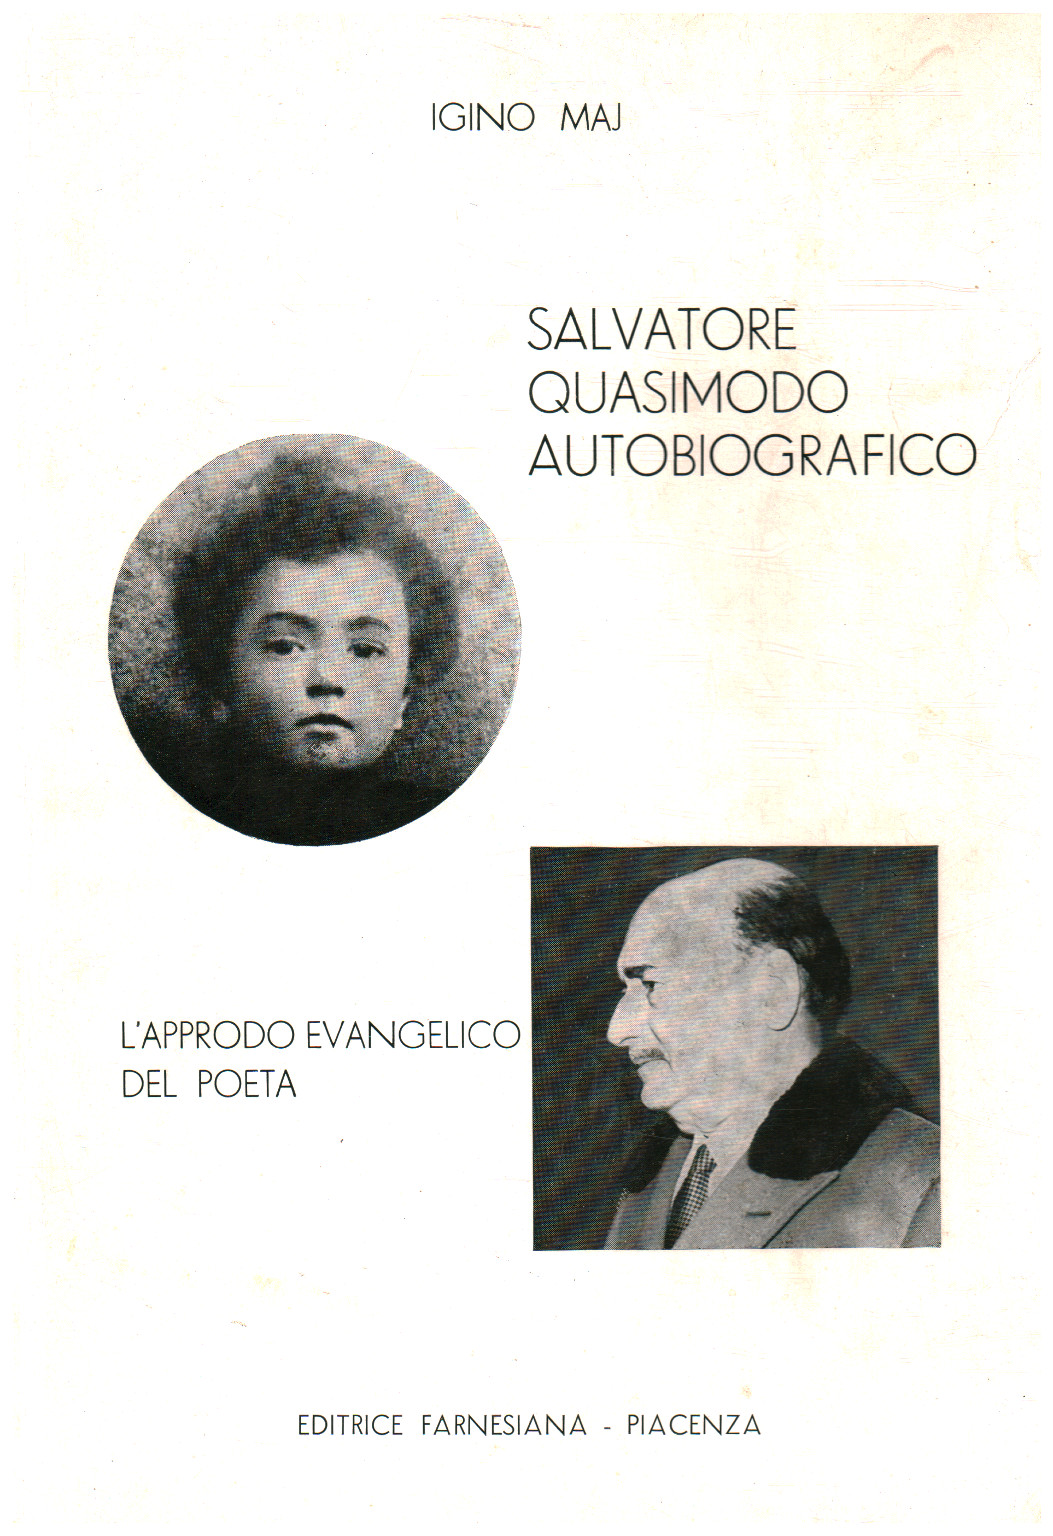 Salvatore Quasimodo autobiographisch, s.zu.